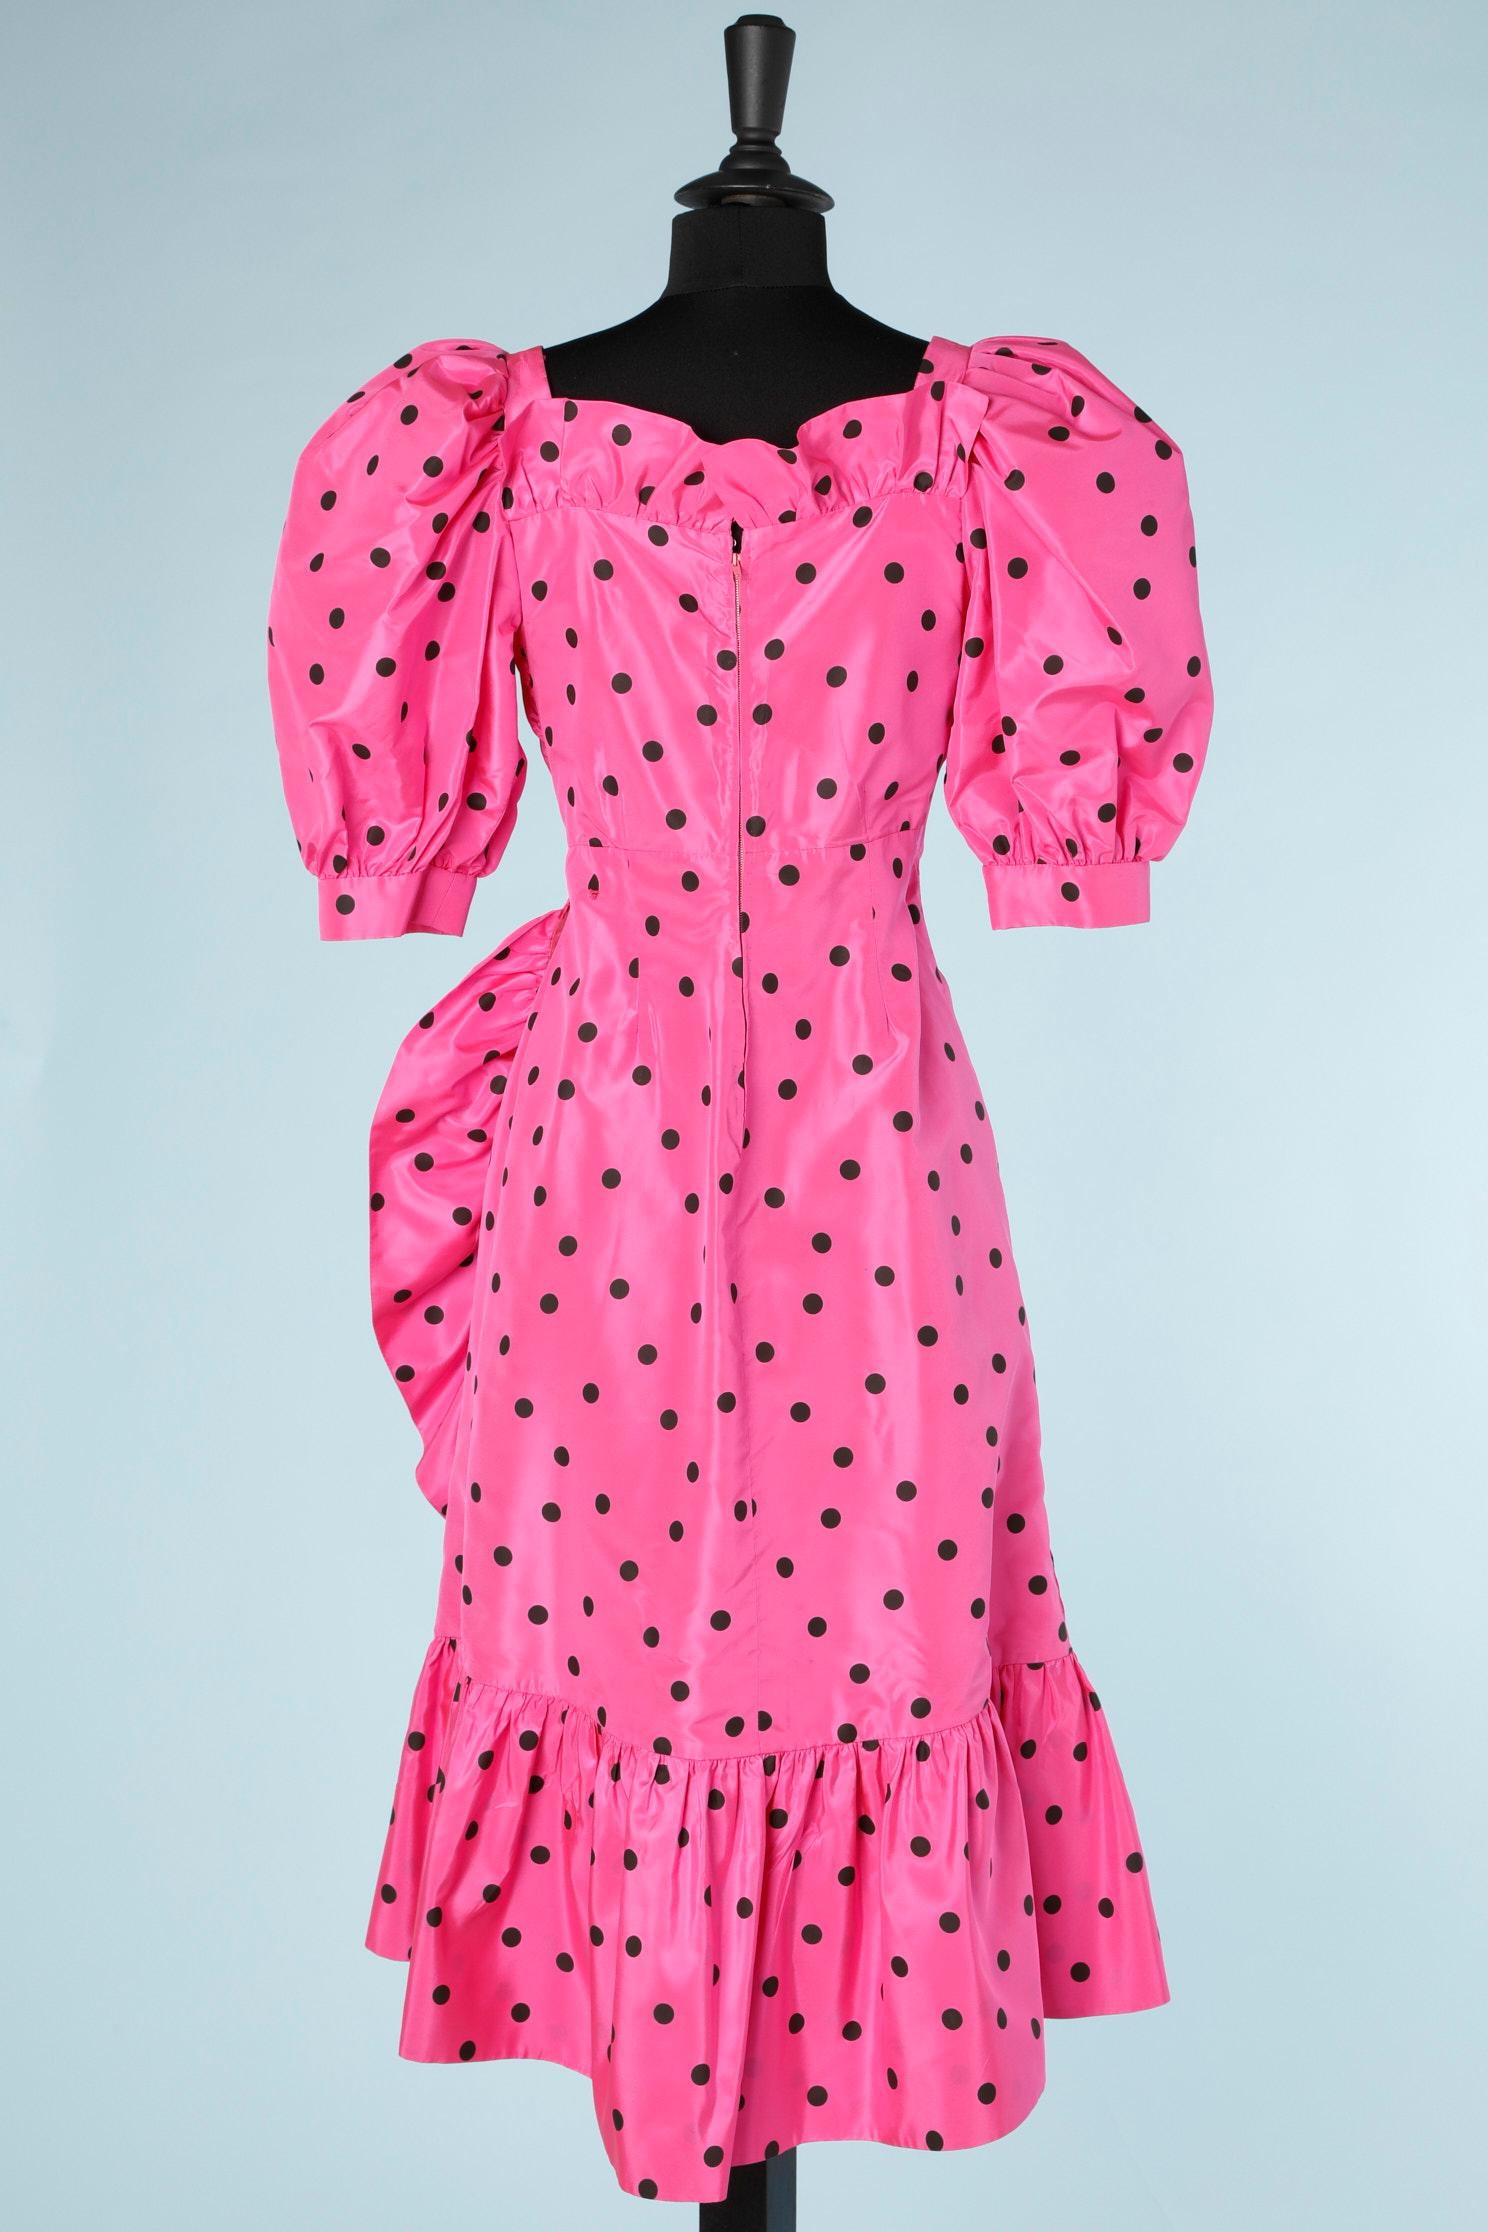 Women's Polka dots 80's cocktail dress Nina Ricci 